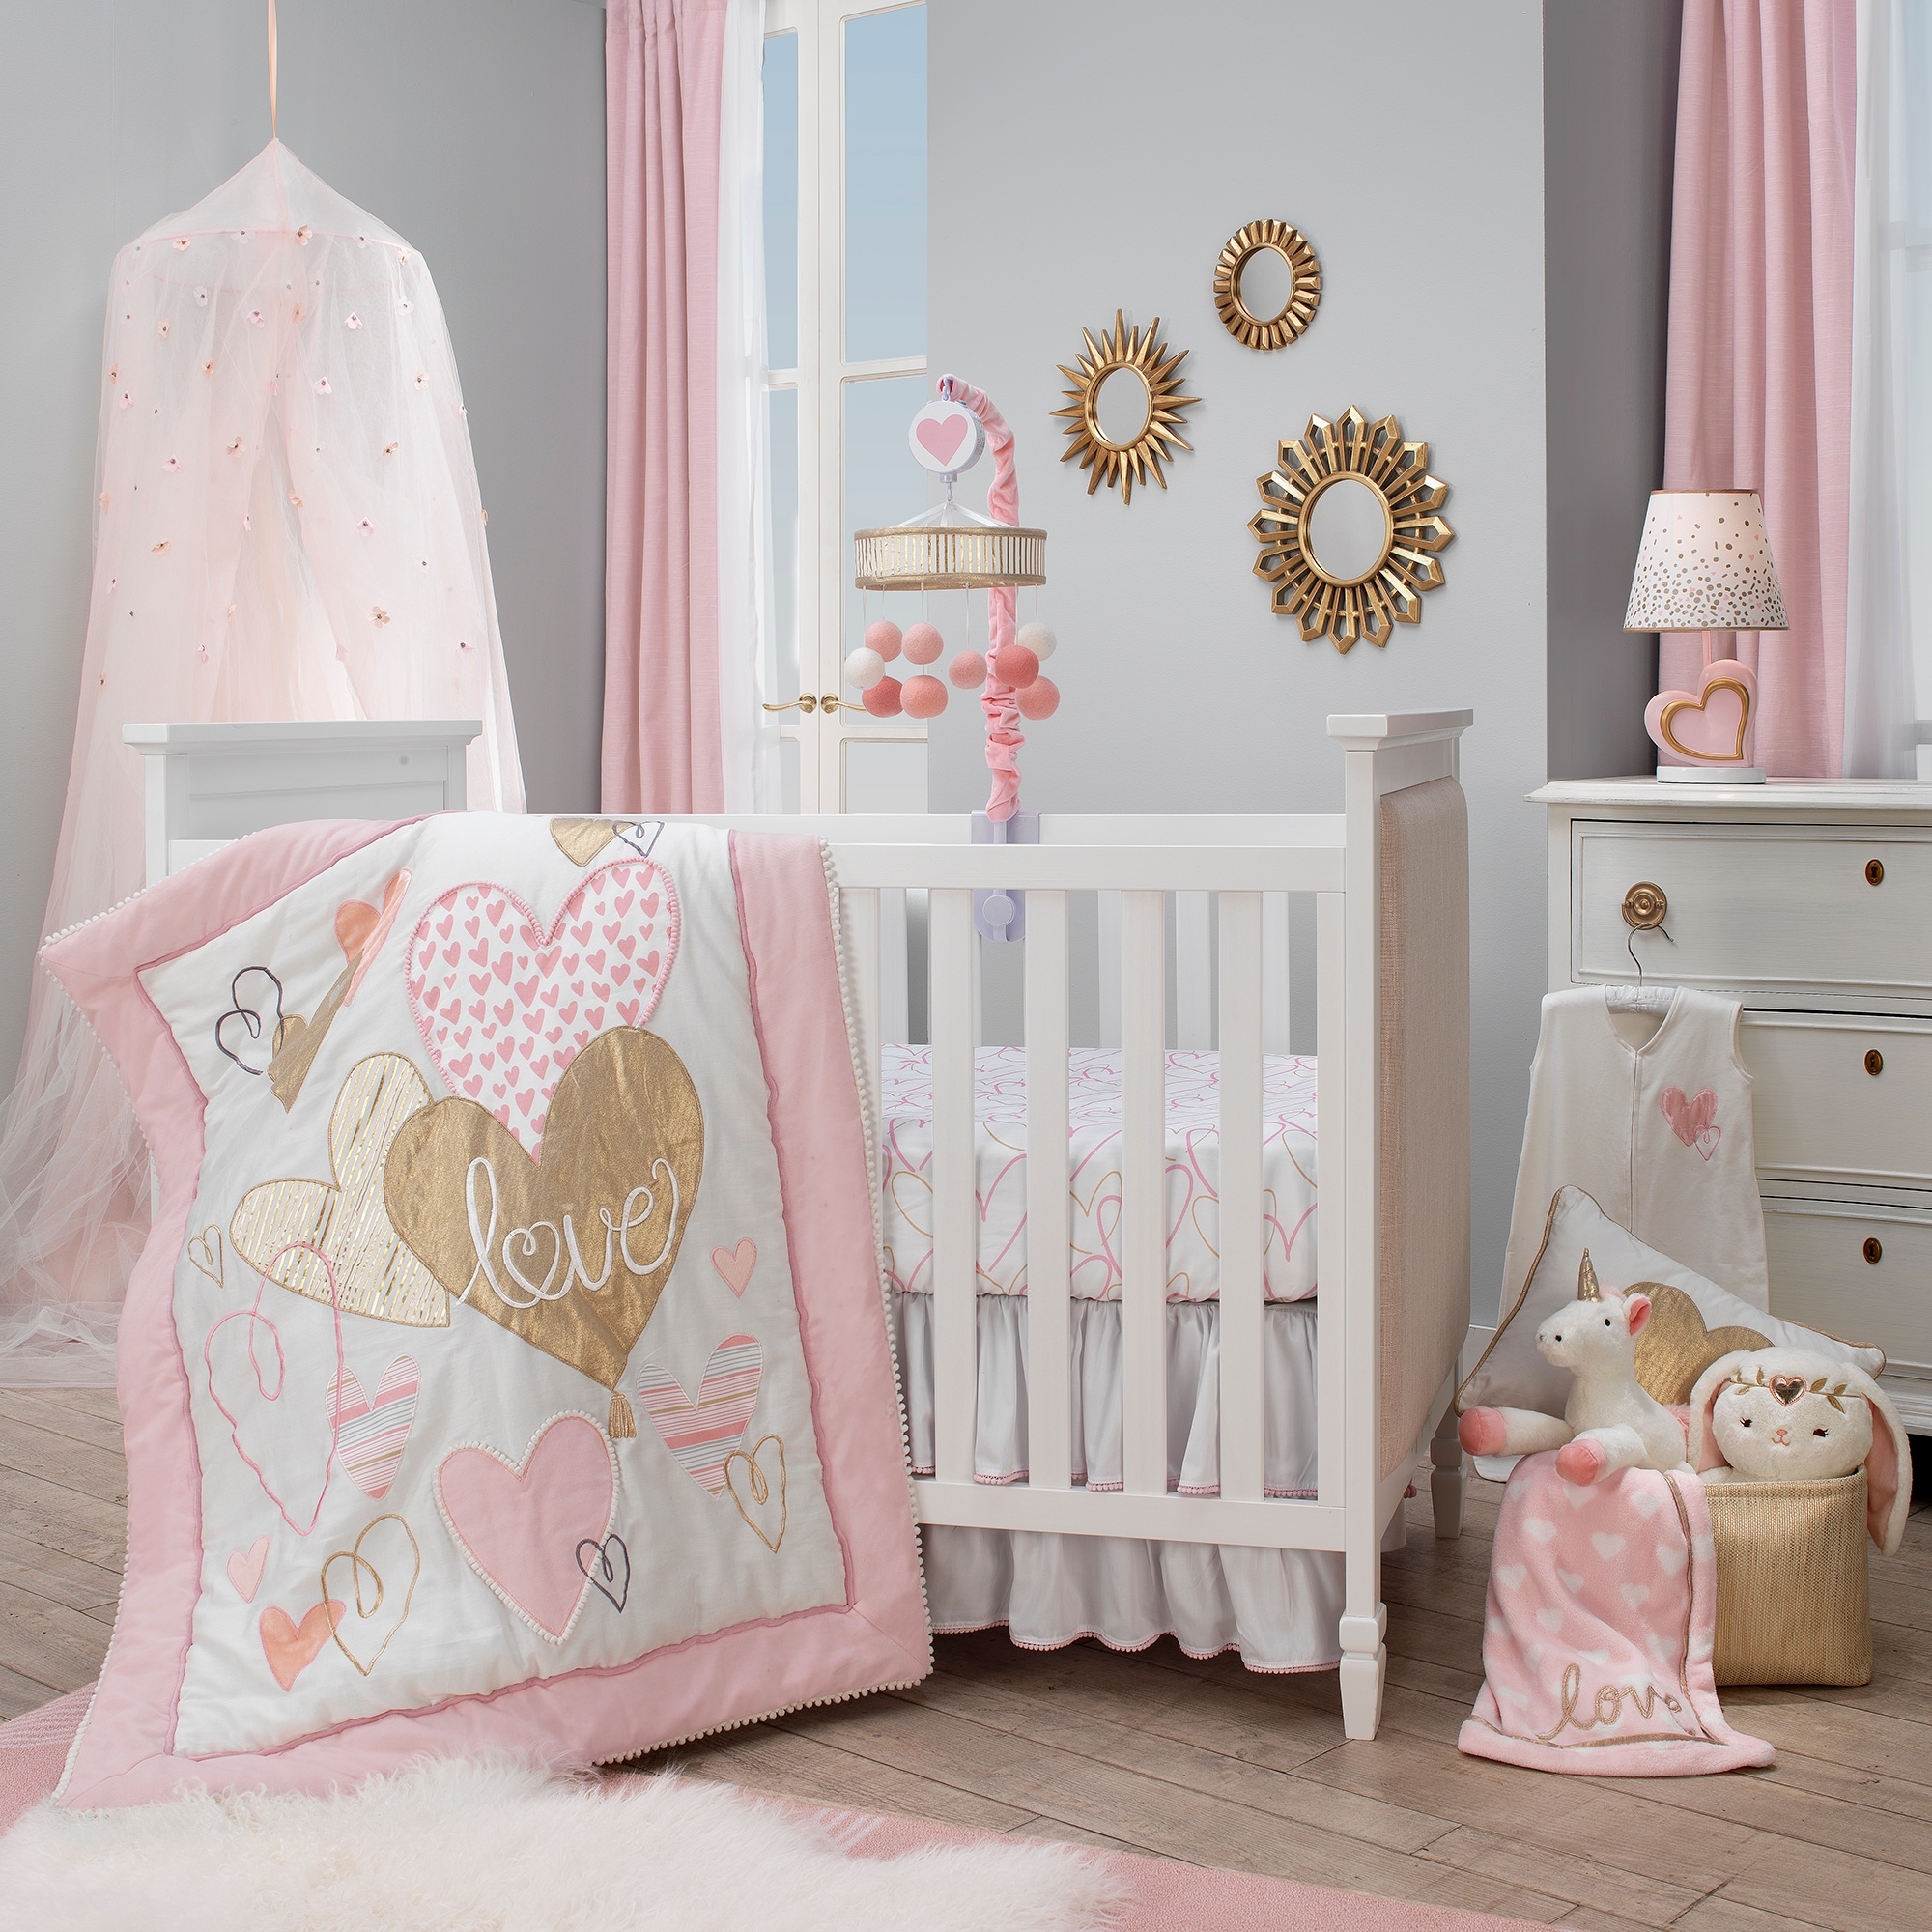 pink and grey nursery bedding